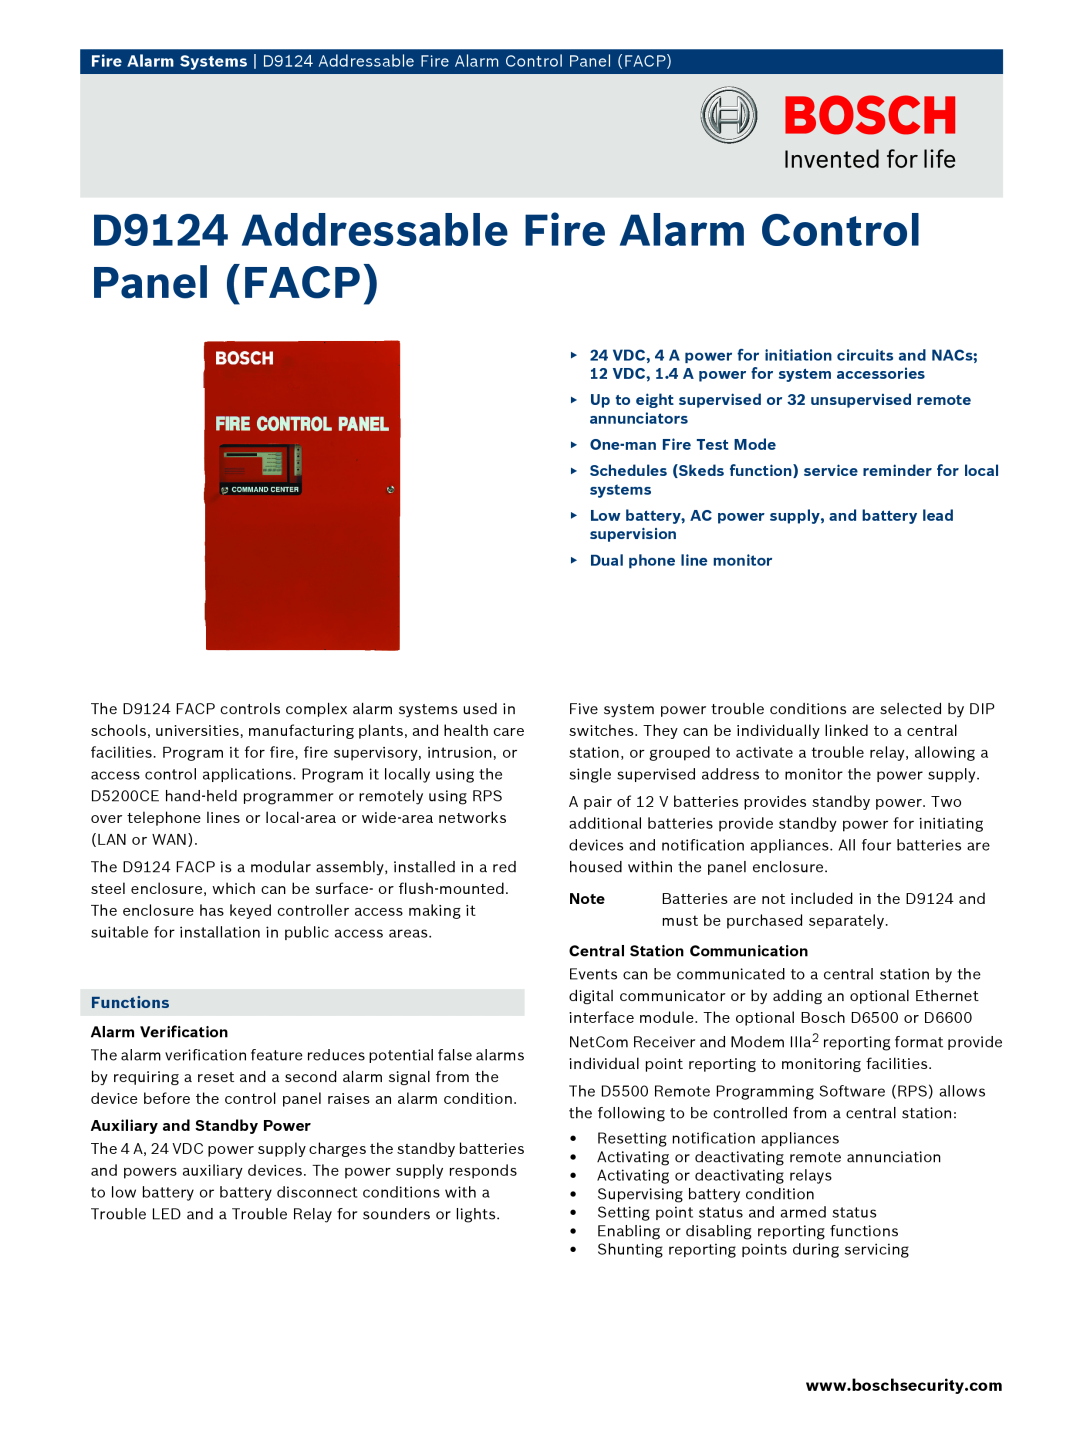 Bosch Appliances manual Fire Alarm Systems D9124 Addressable Fire Alarm Control Panel FACP, Functions 